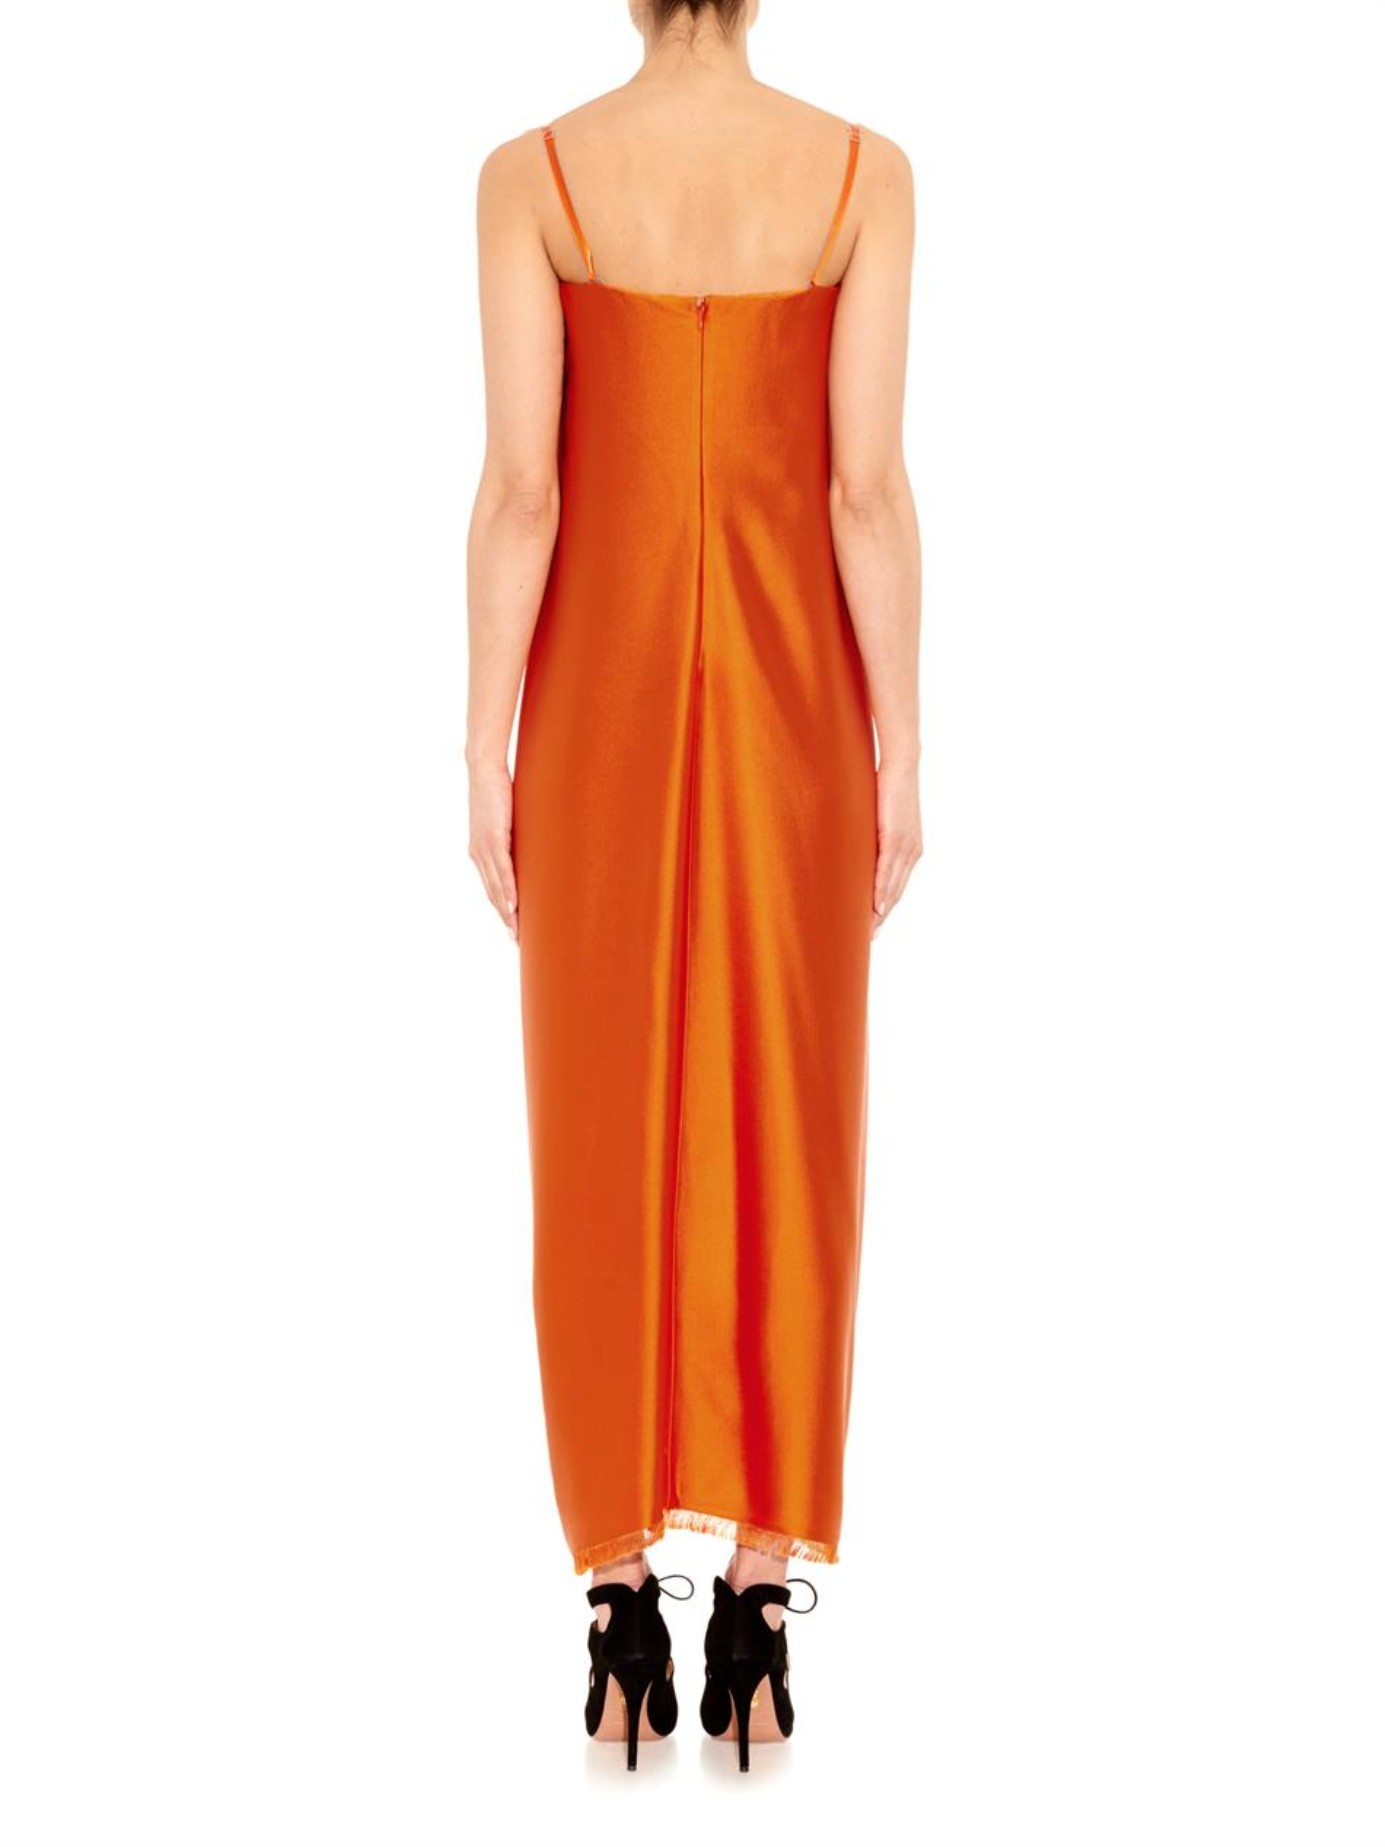 Lyst - Sportmax Umes Dress in Orange